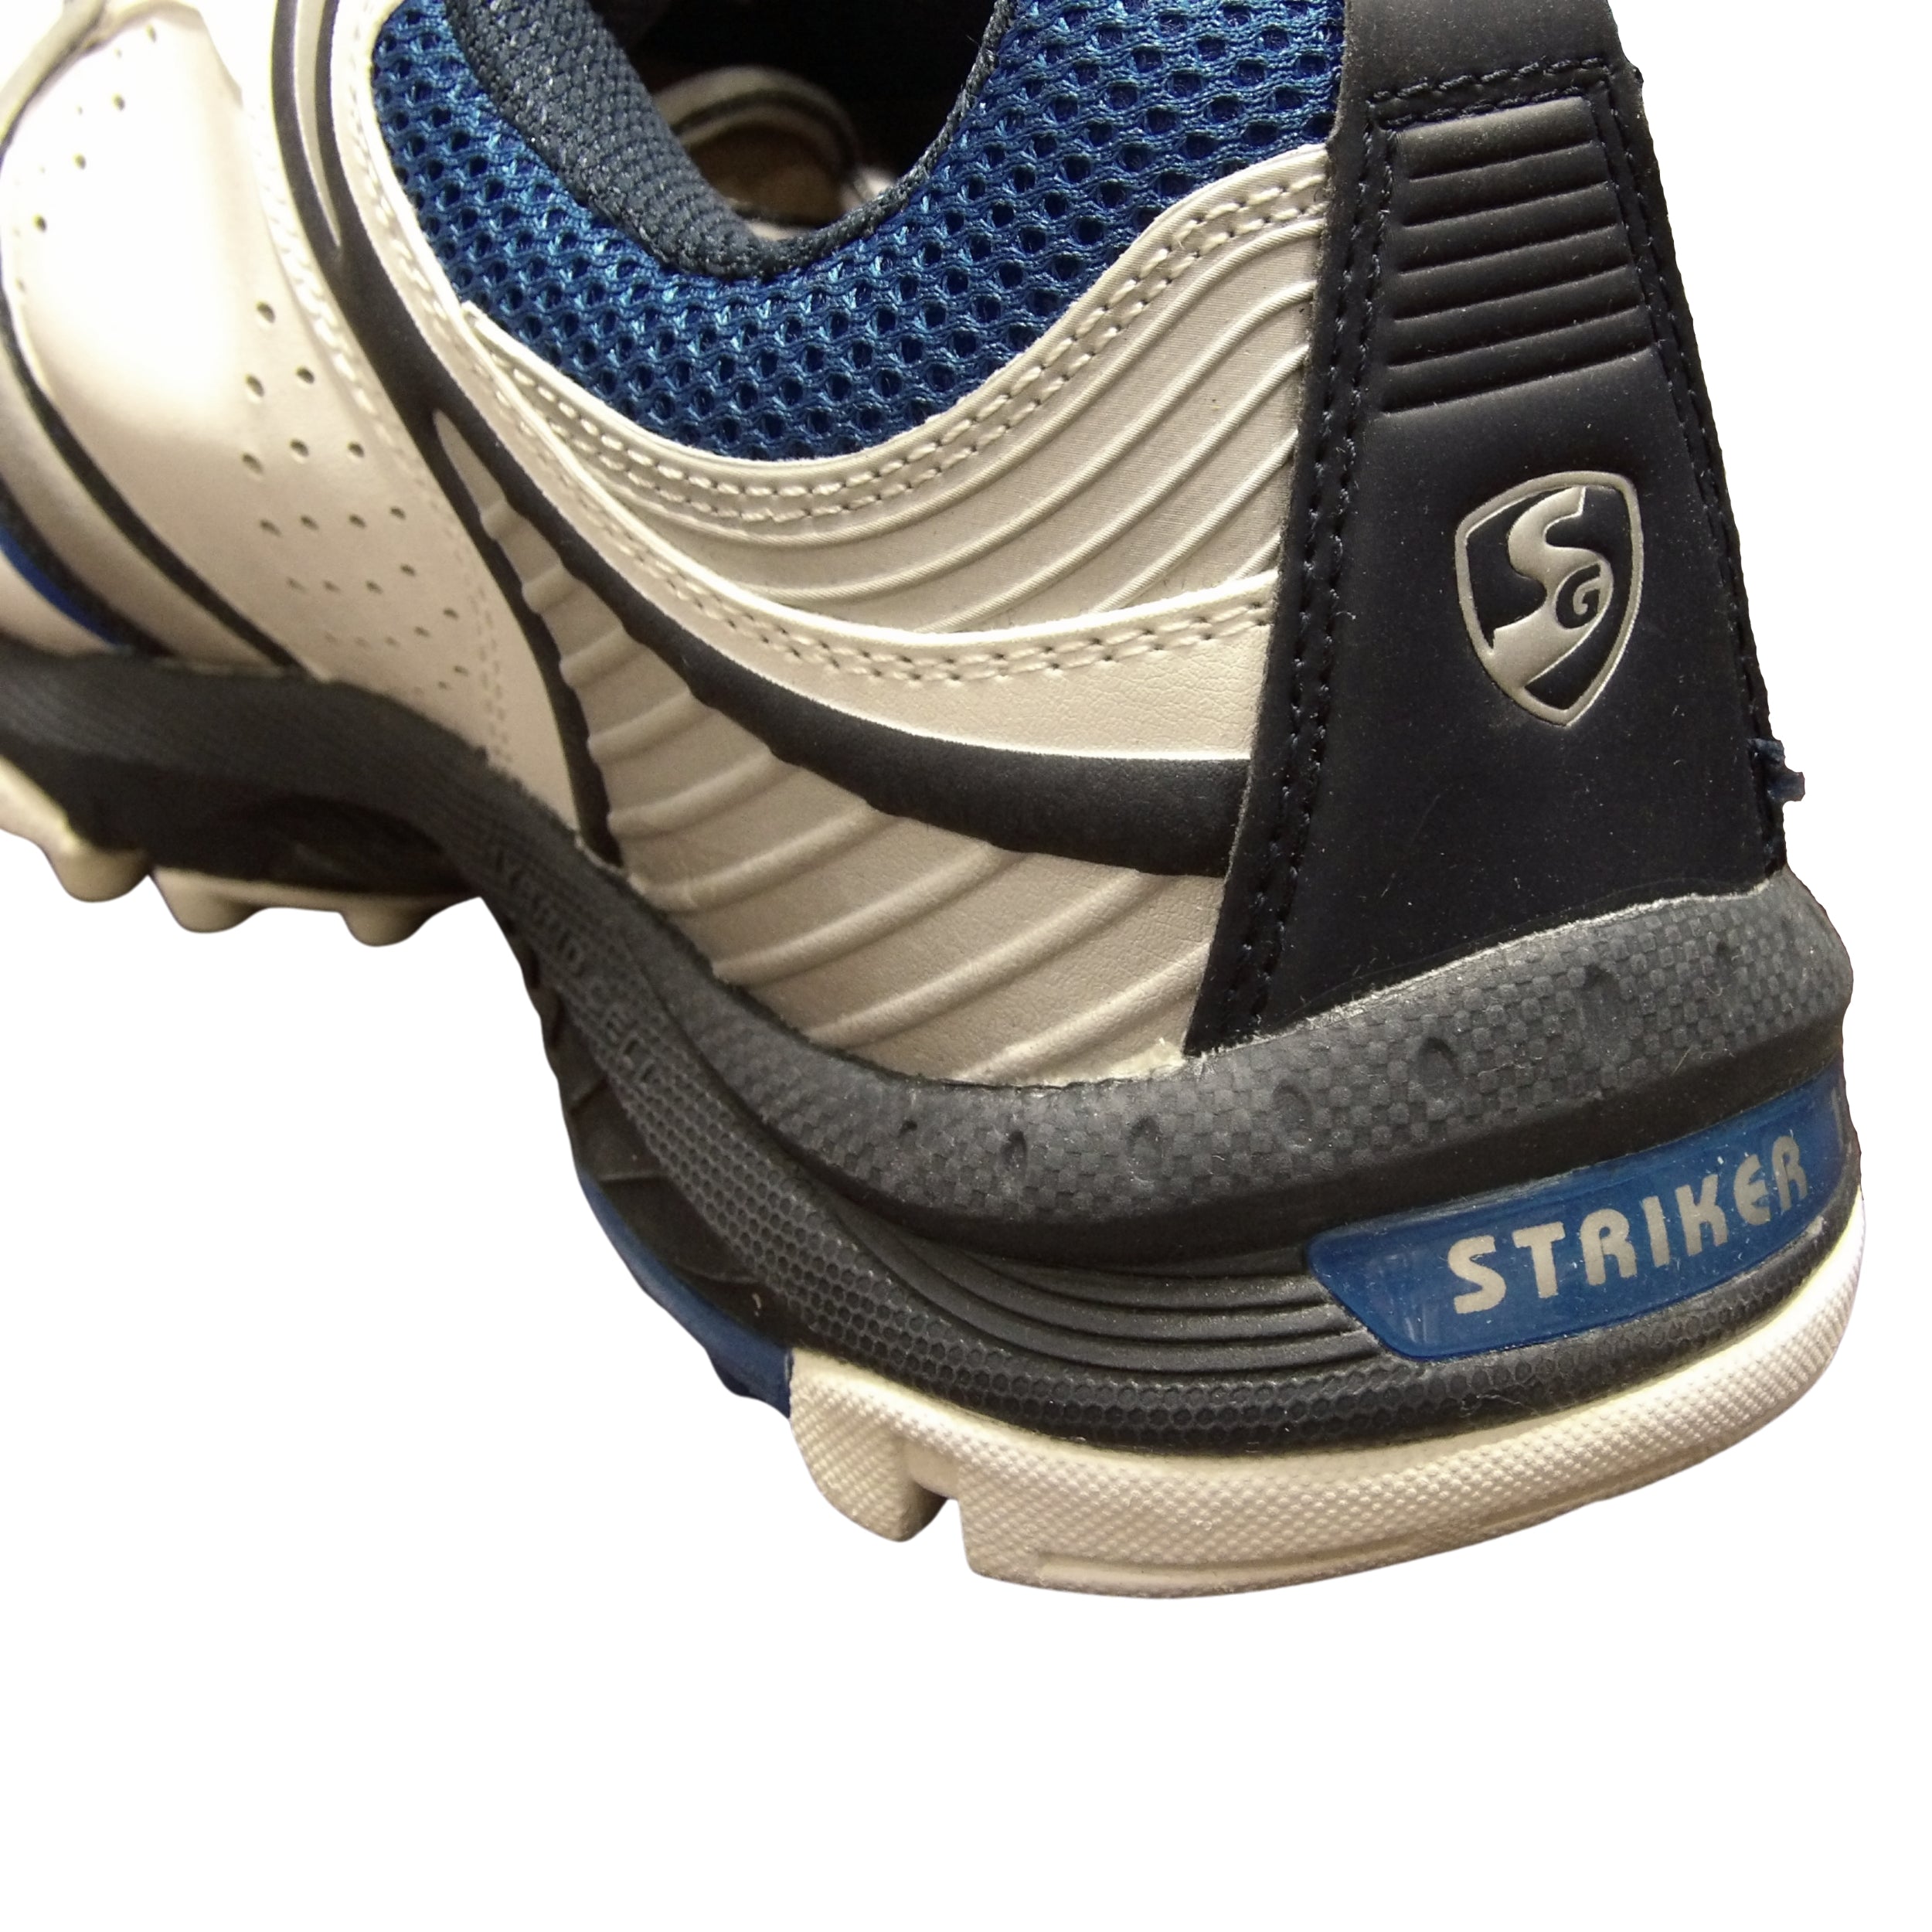 SG Cricket Shoes, Model Striker II - White/Silver/Blue